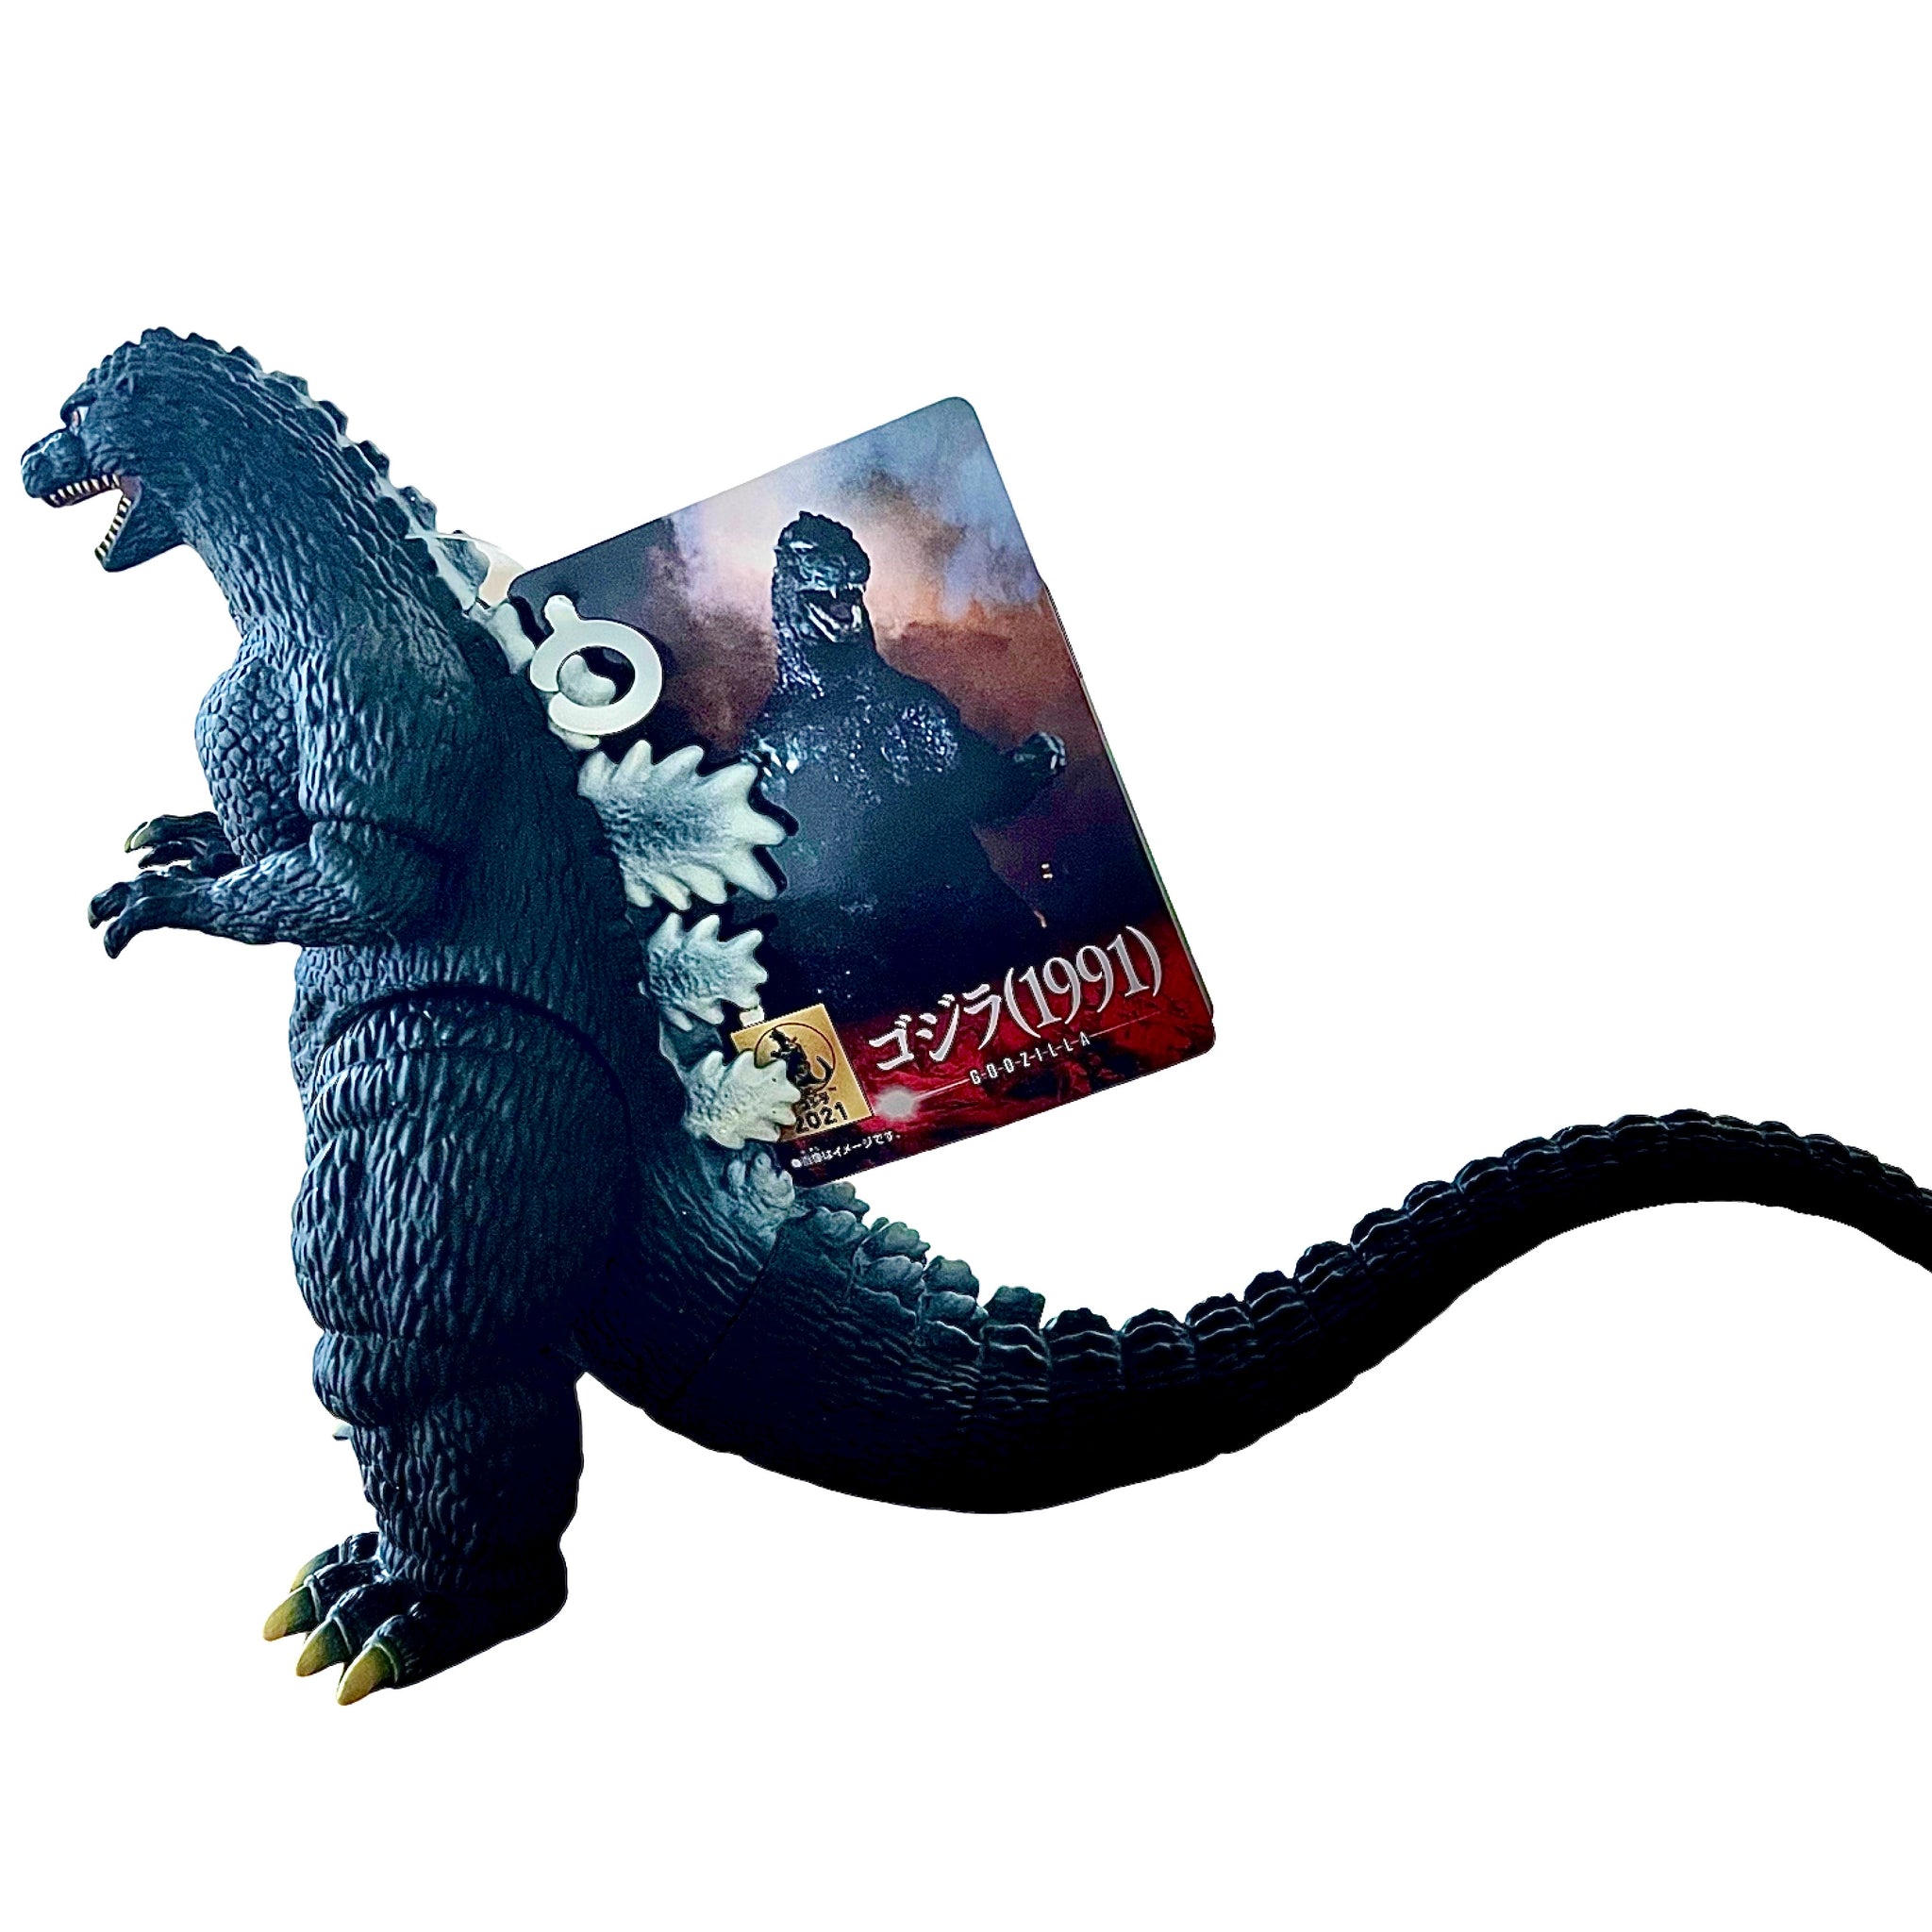 Godzilla  Movie Monster Series 6 inch Soft Vinyl Toy Figure by